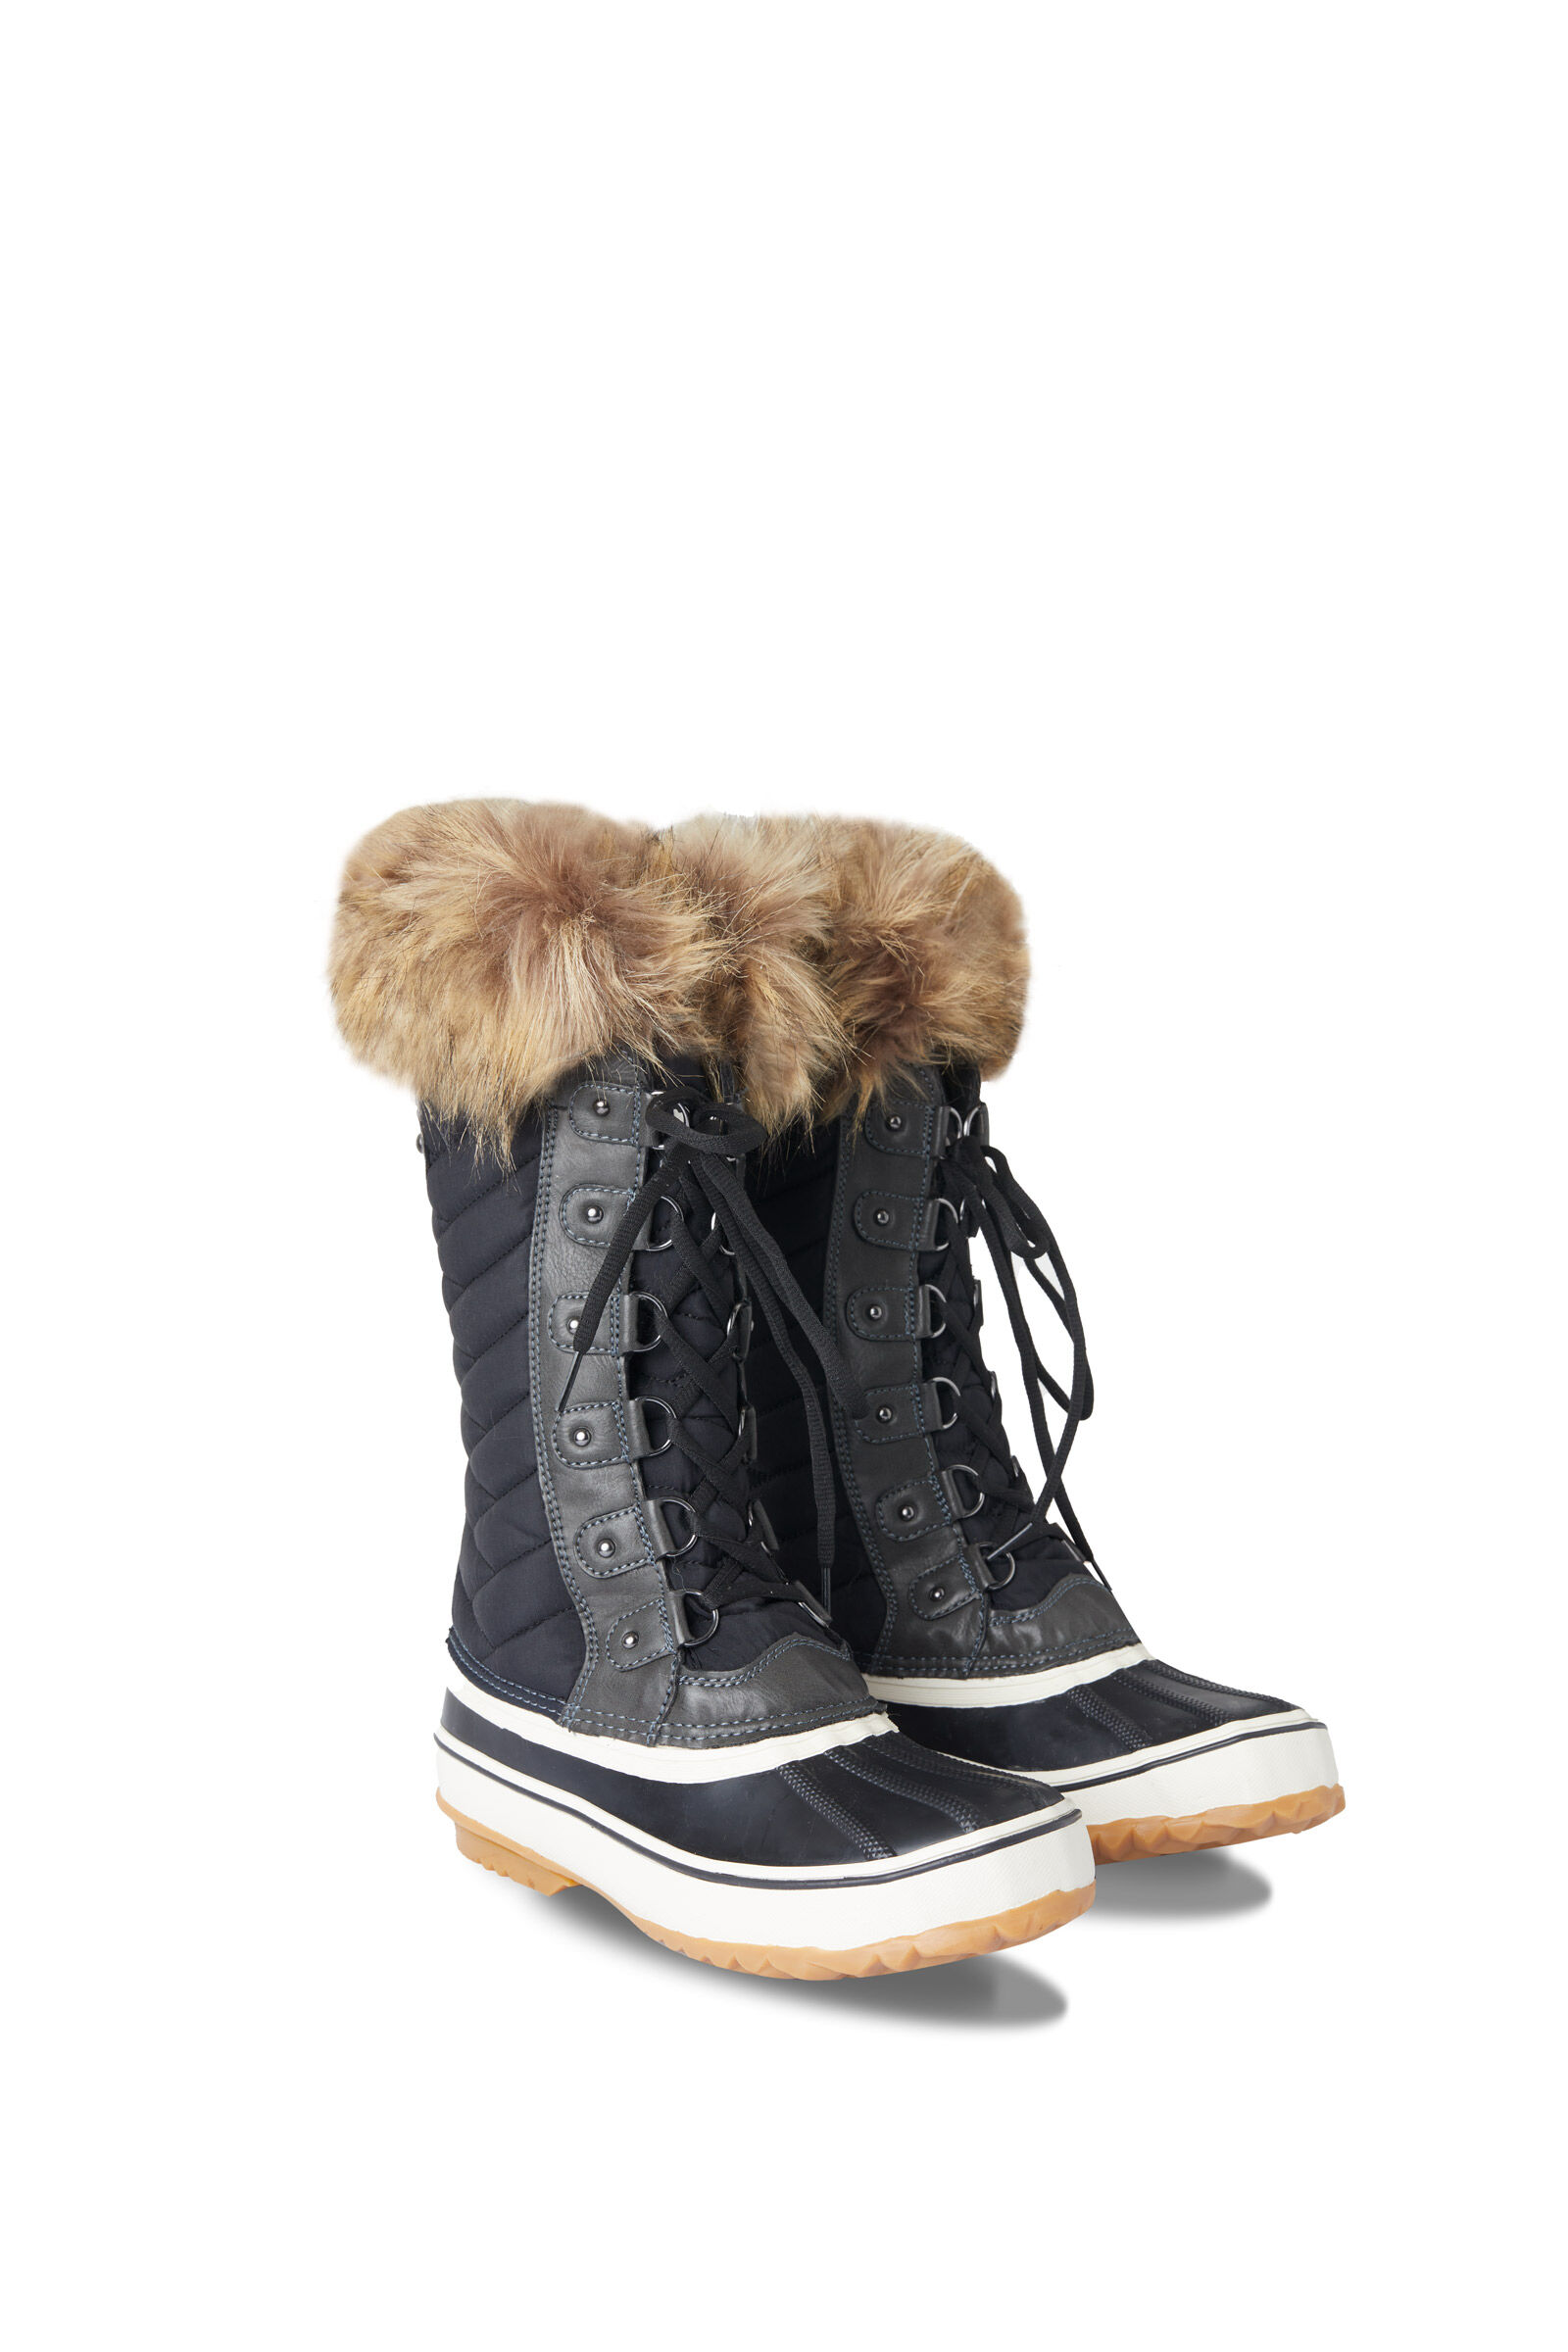 Snow Boots With Fur Trim Deals | bellvalefarms.com